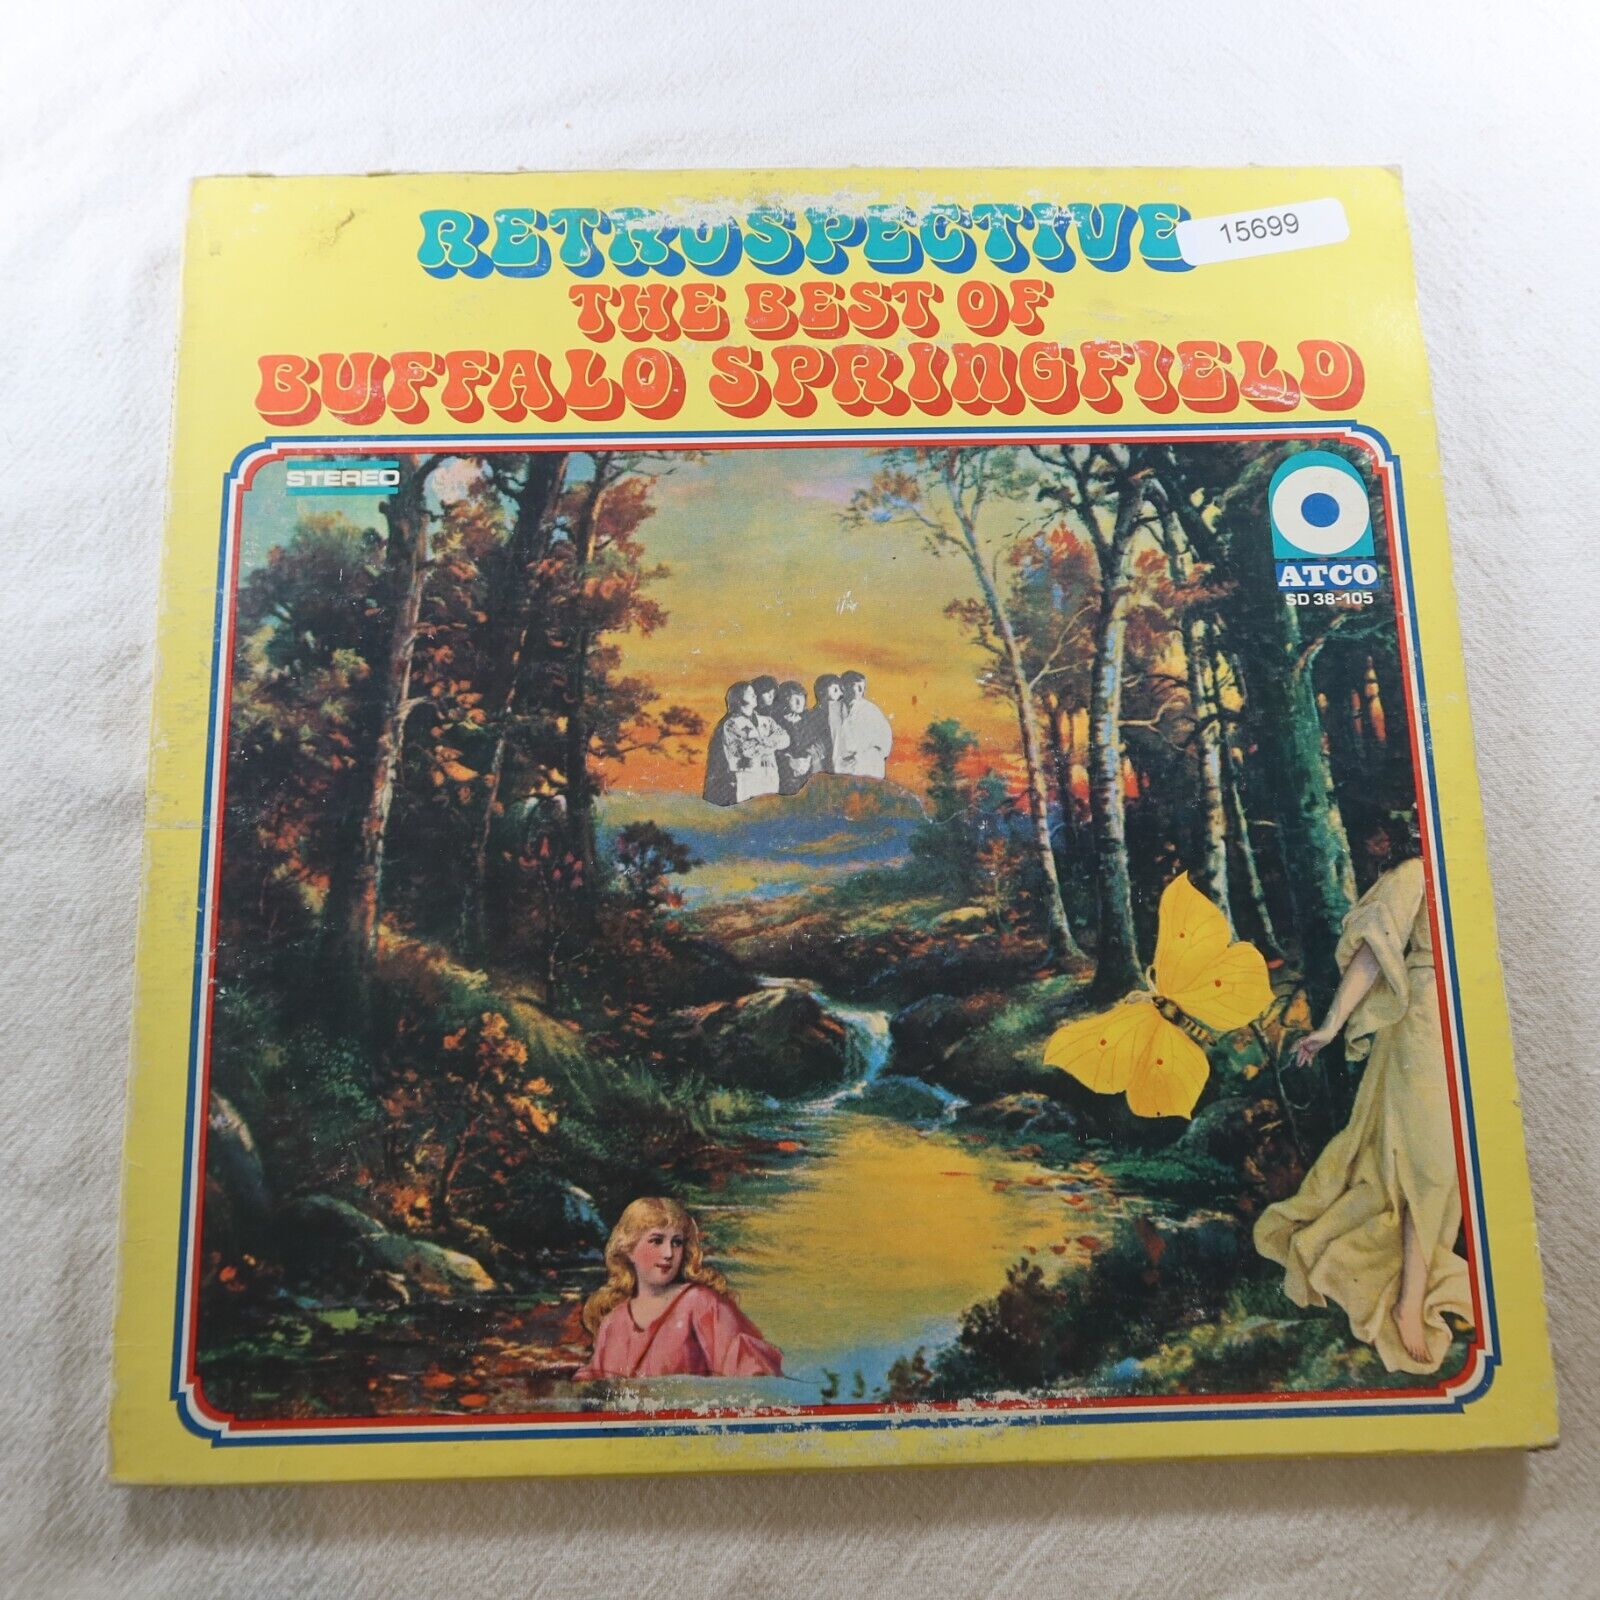 Buffalo Springfield Retrospective   Record Album Vinyl LP